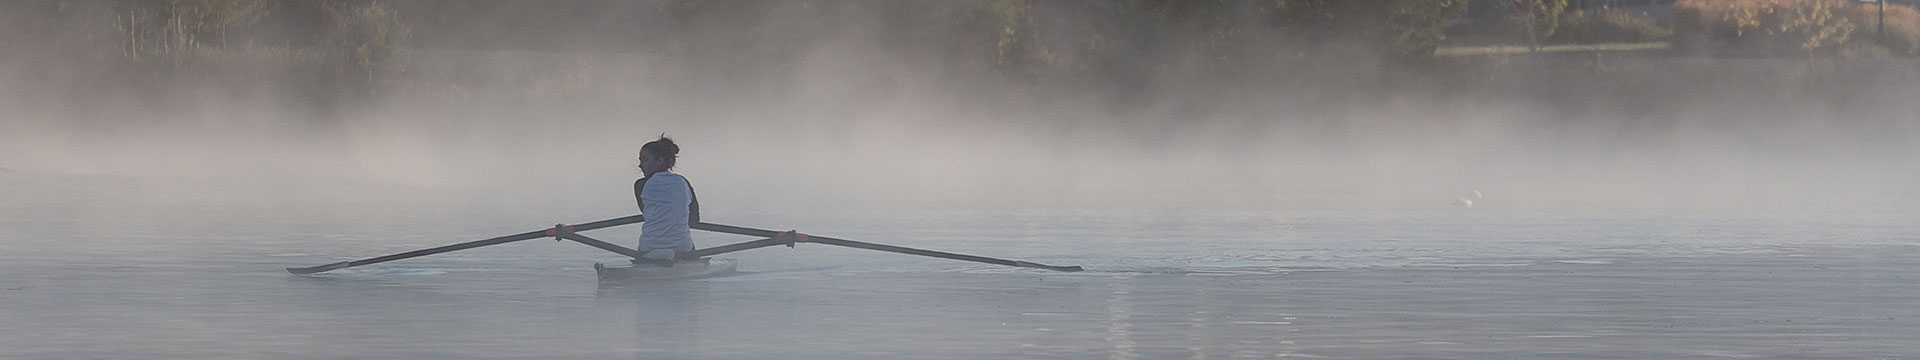 Single morning rower on the Otonabee River at Trent University in Peterborough, Ontario. Photo credit: John MacLean